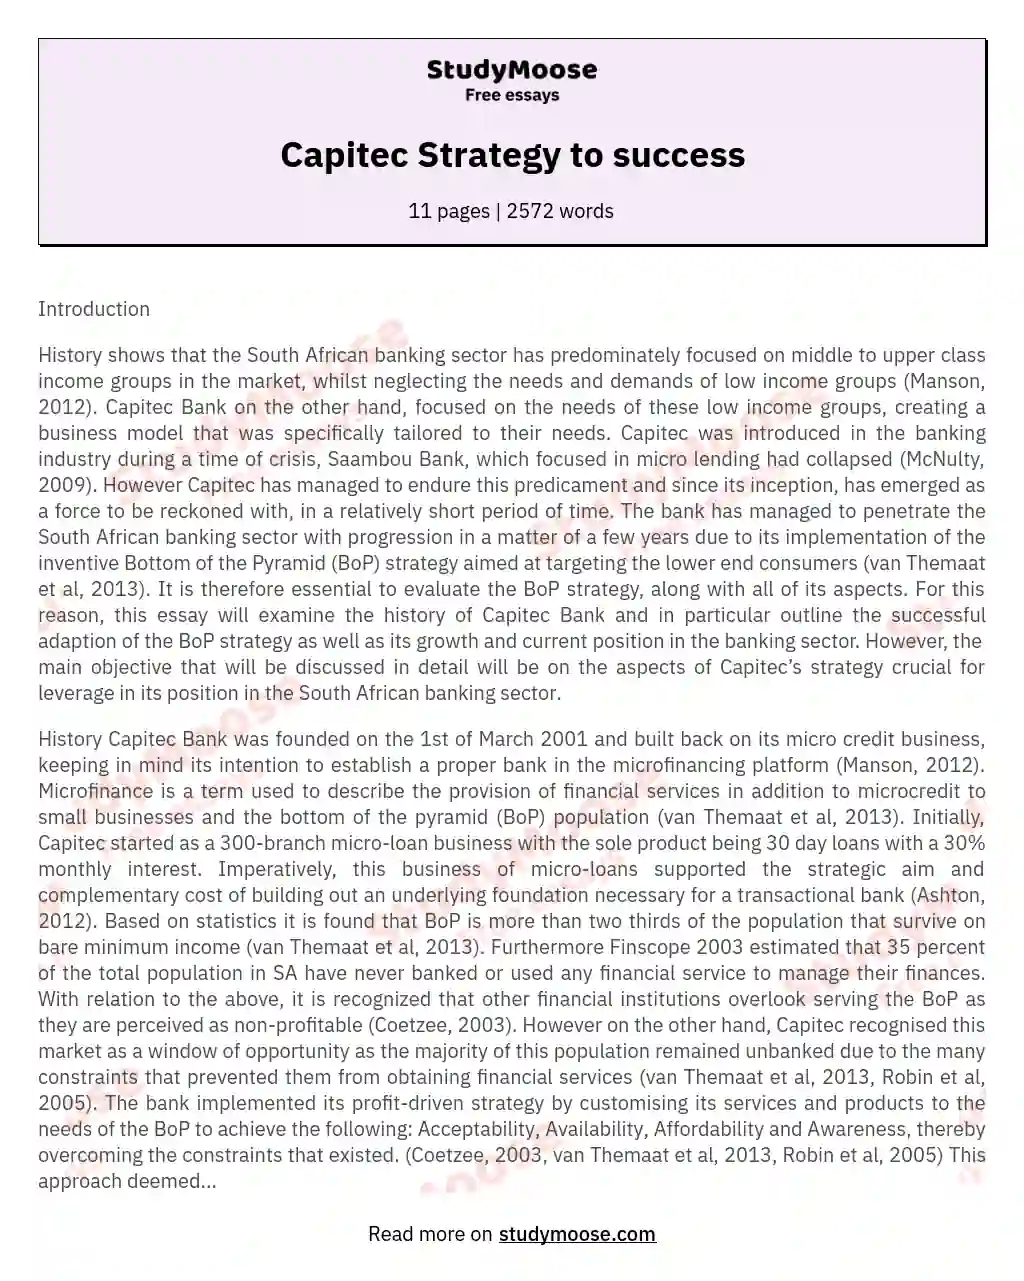 Capitec Strategy to success essay